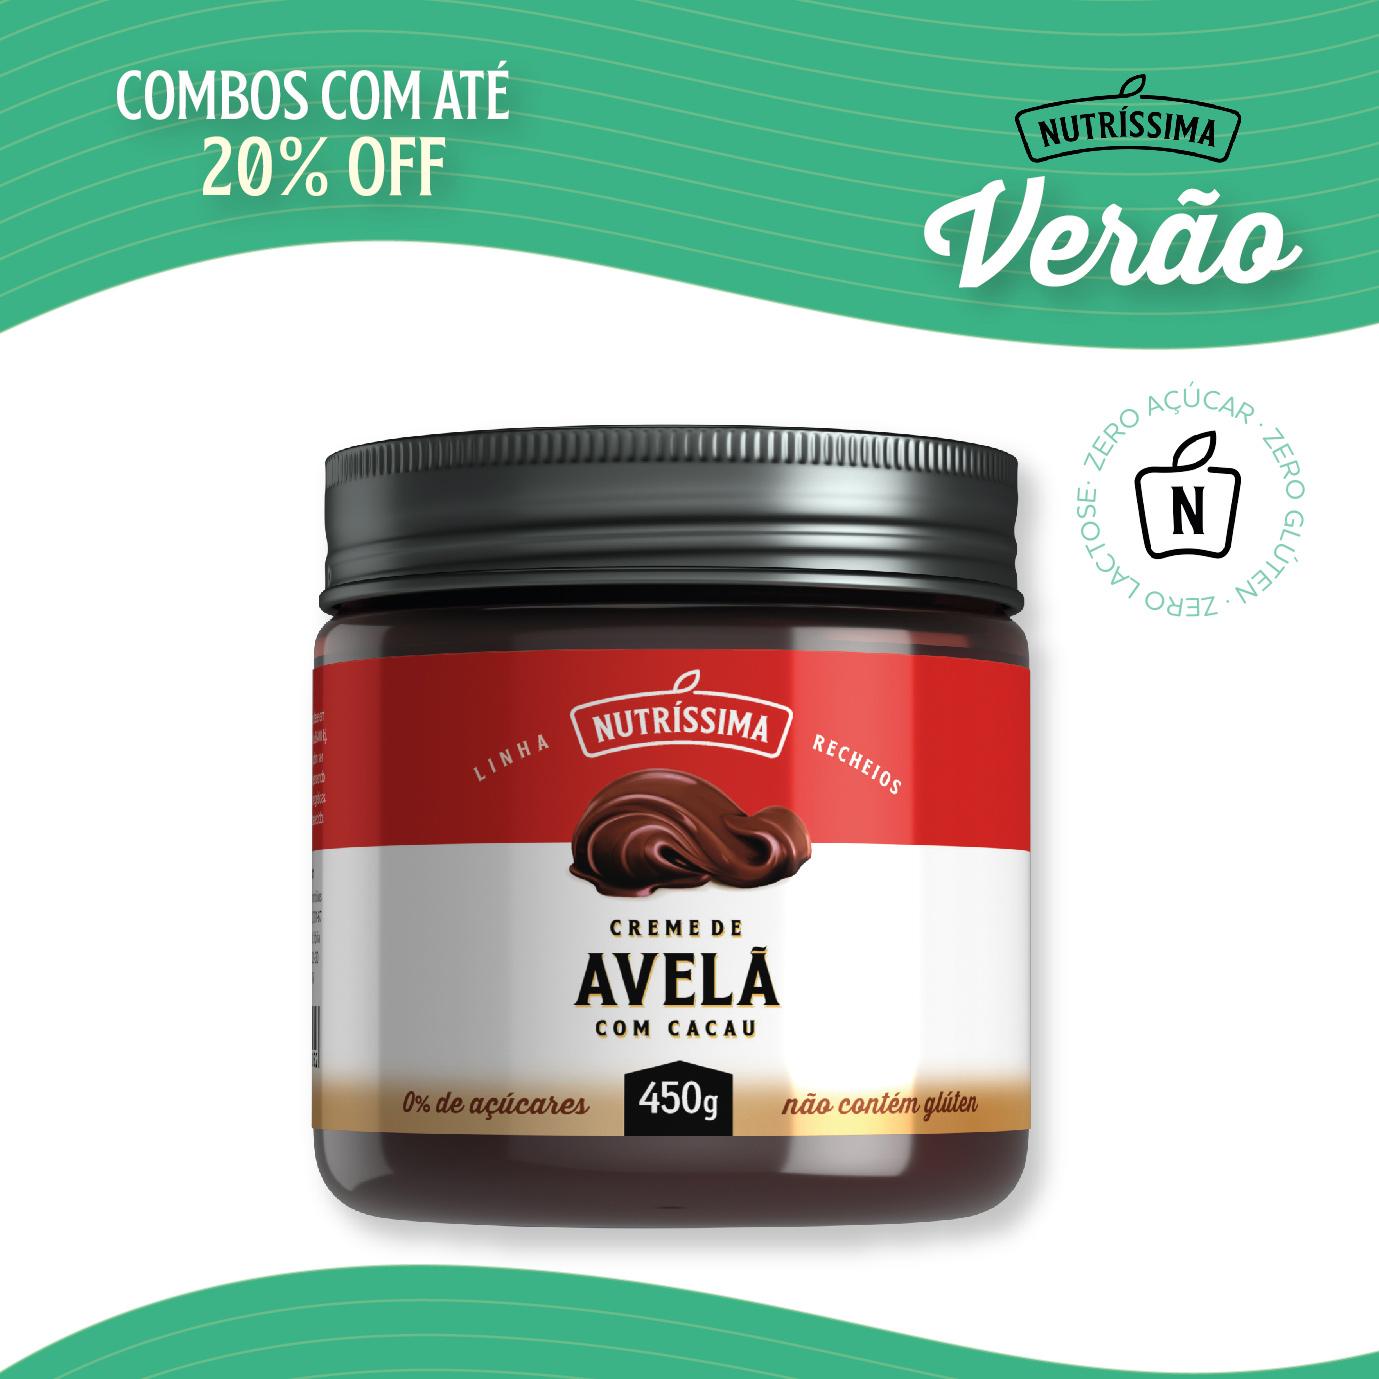 COMBO CREME DE AVELÃ (450g) + CHOCOTONE (450g)